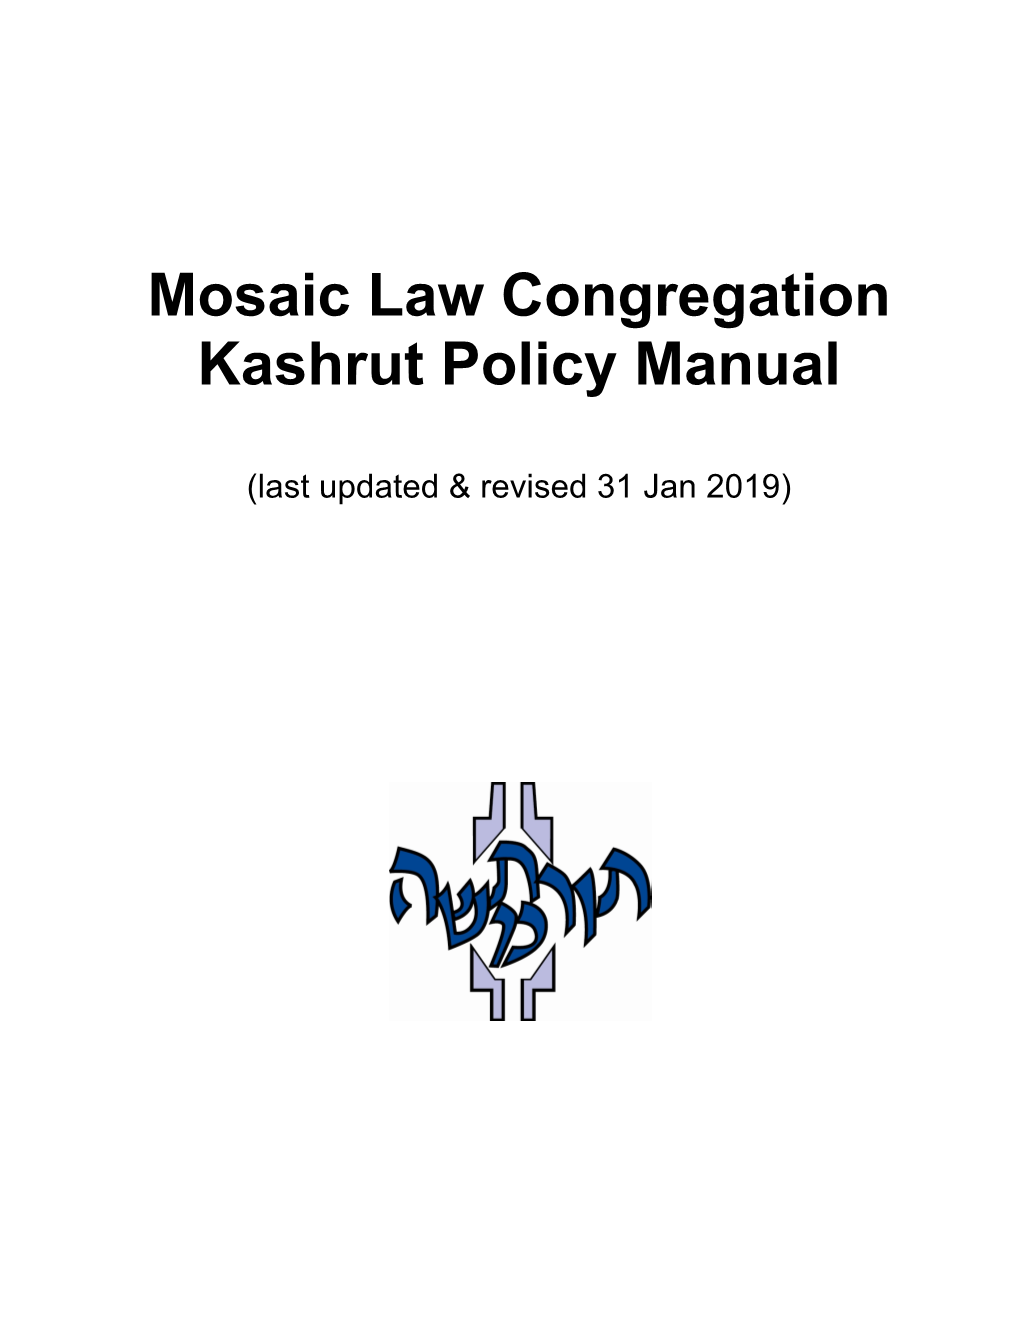 Mosaic Law Congregation Kashrut Policy Manual